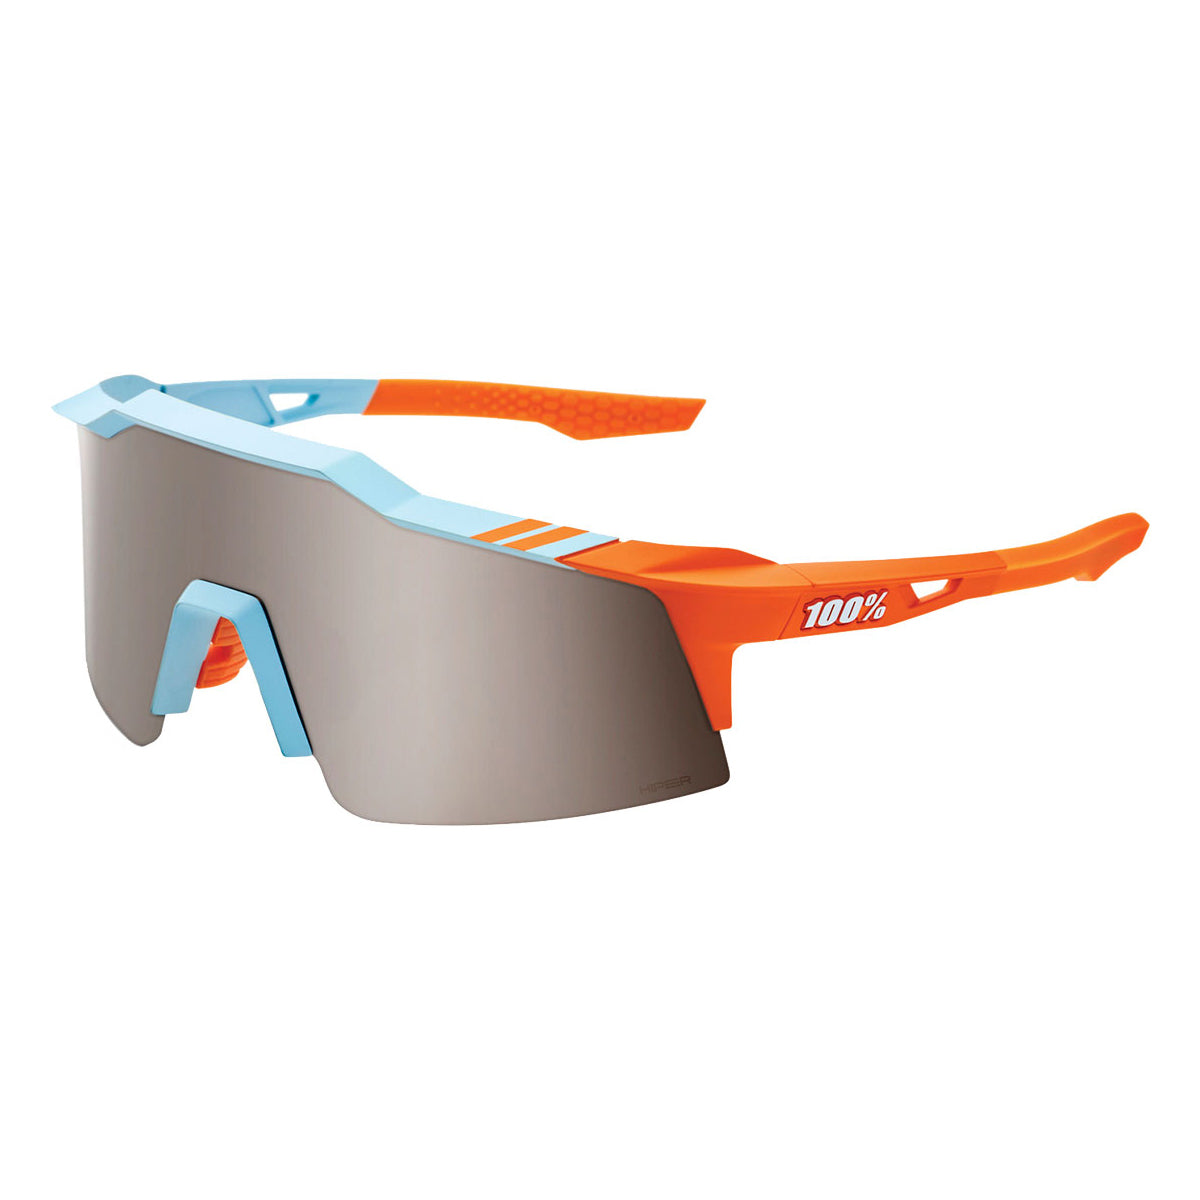 100 Percent Speedcraft SL Sunglasses - Soft Tact Two Tone - HiPER Silver Mirror Lens